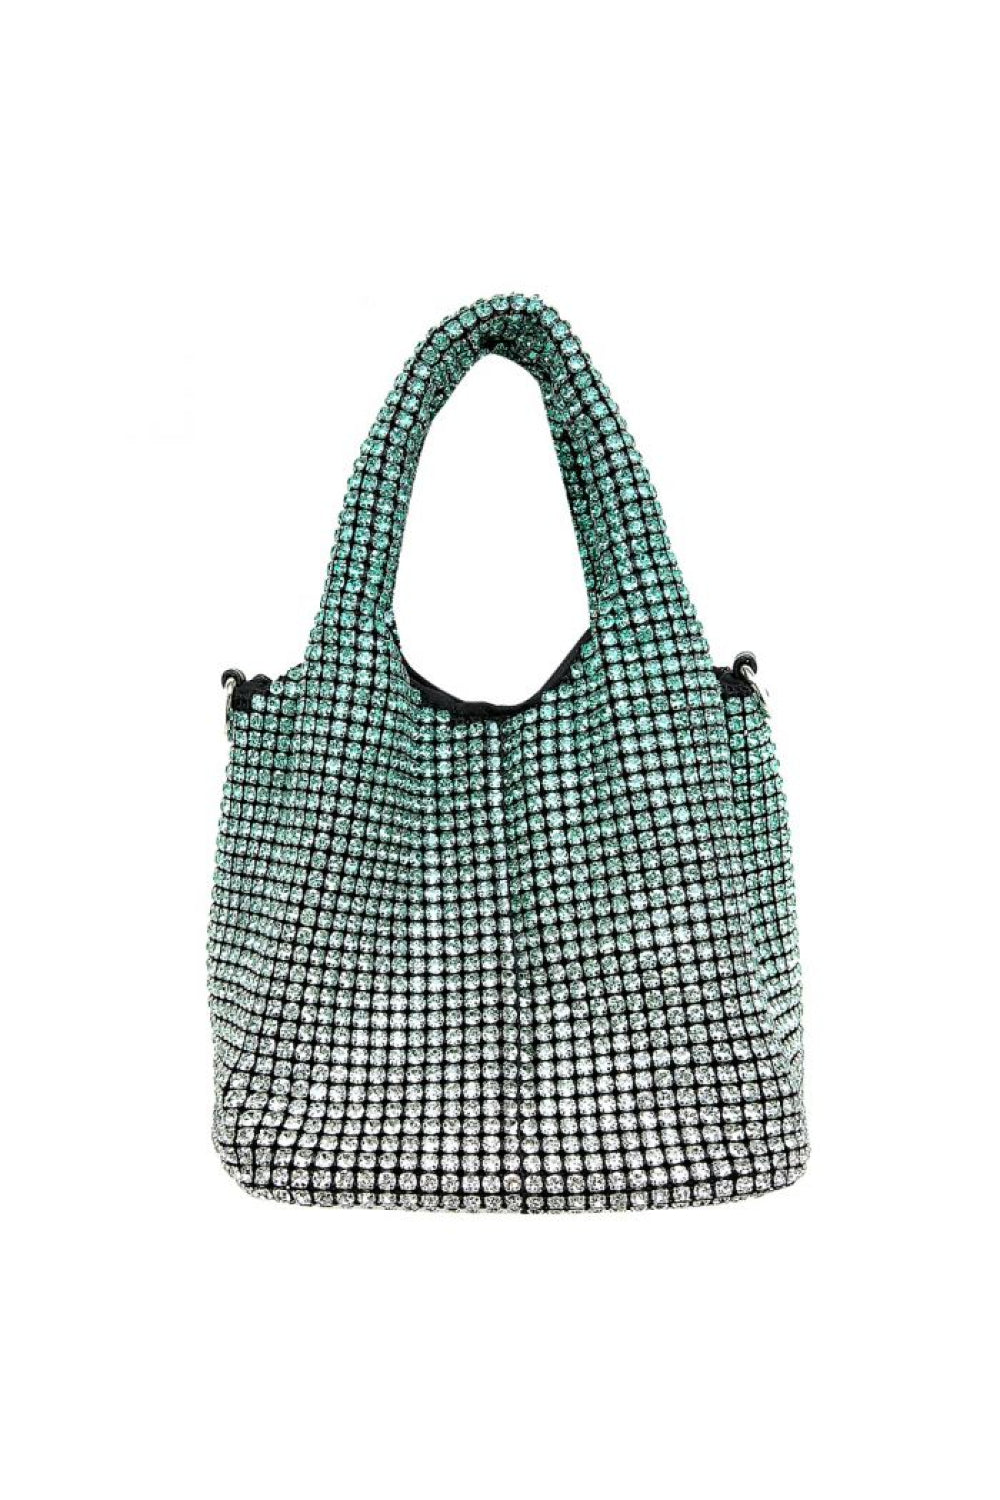 Green Crystal Top Handle Evening Bag ALP815